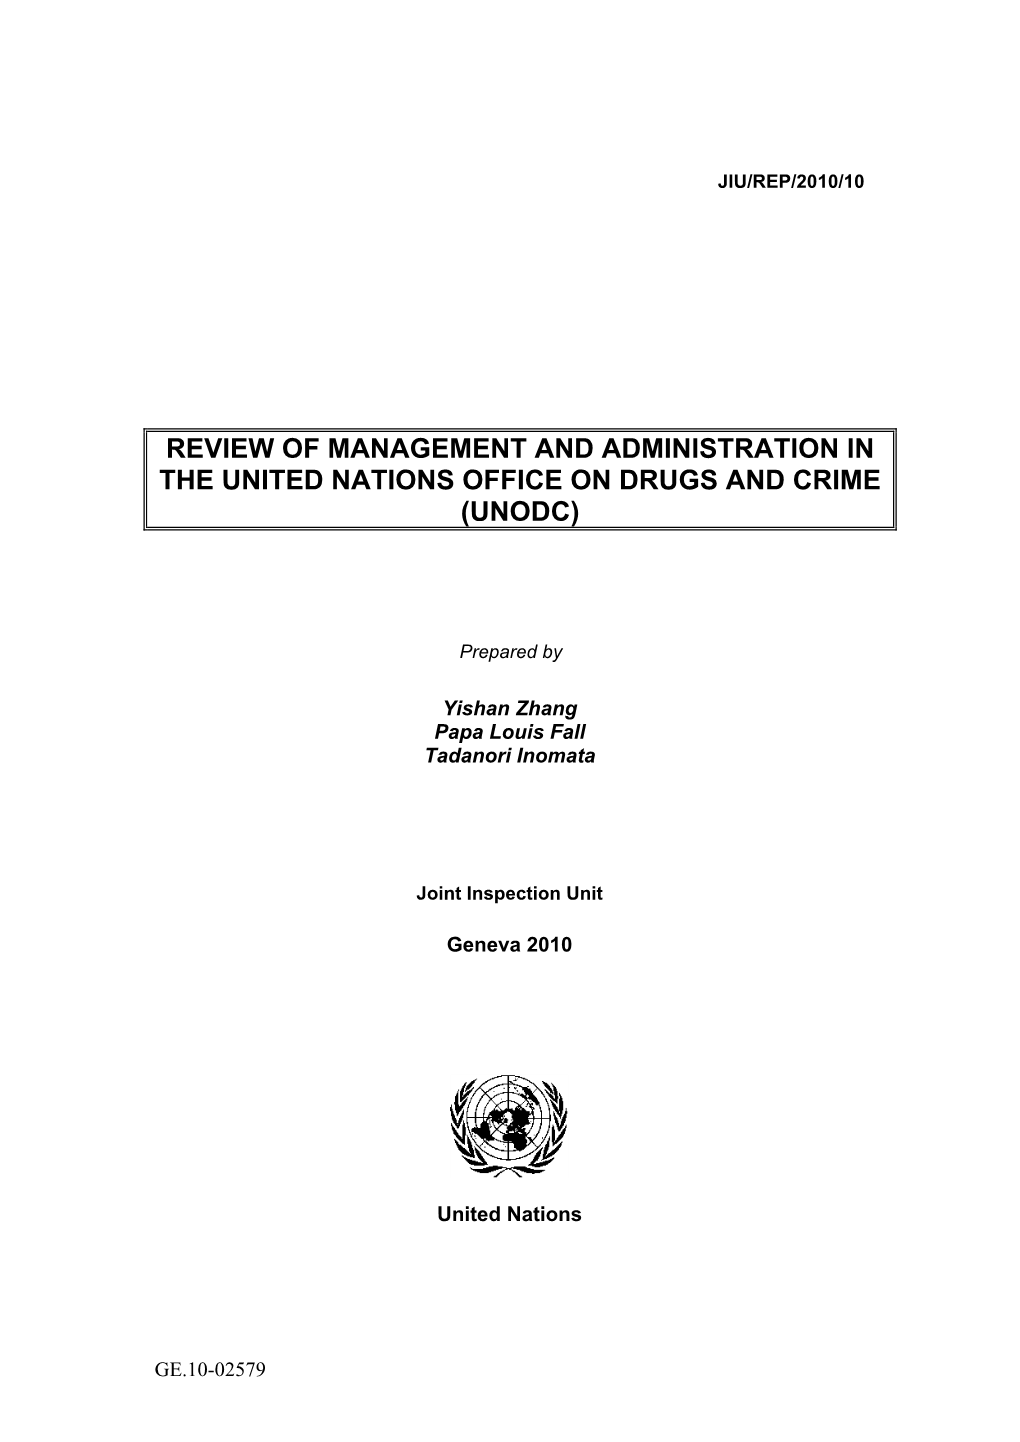 A 355 UNODC Review